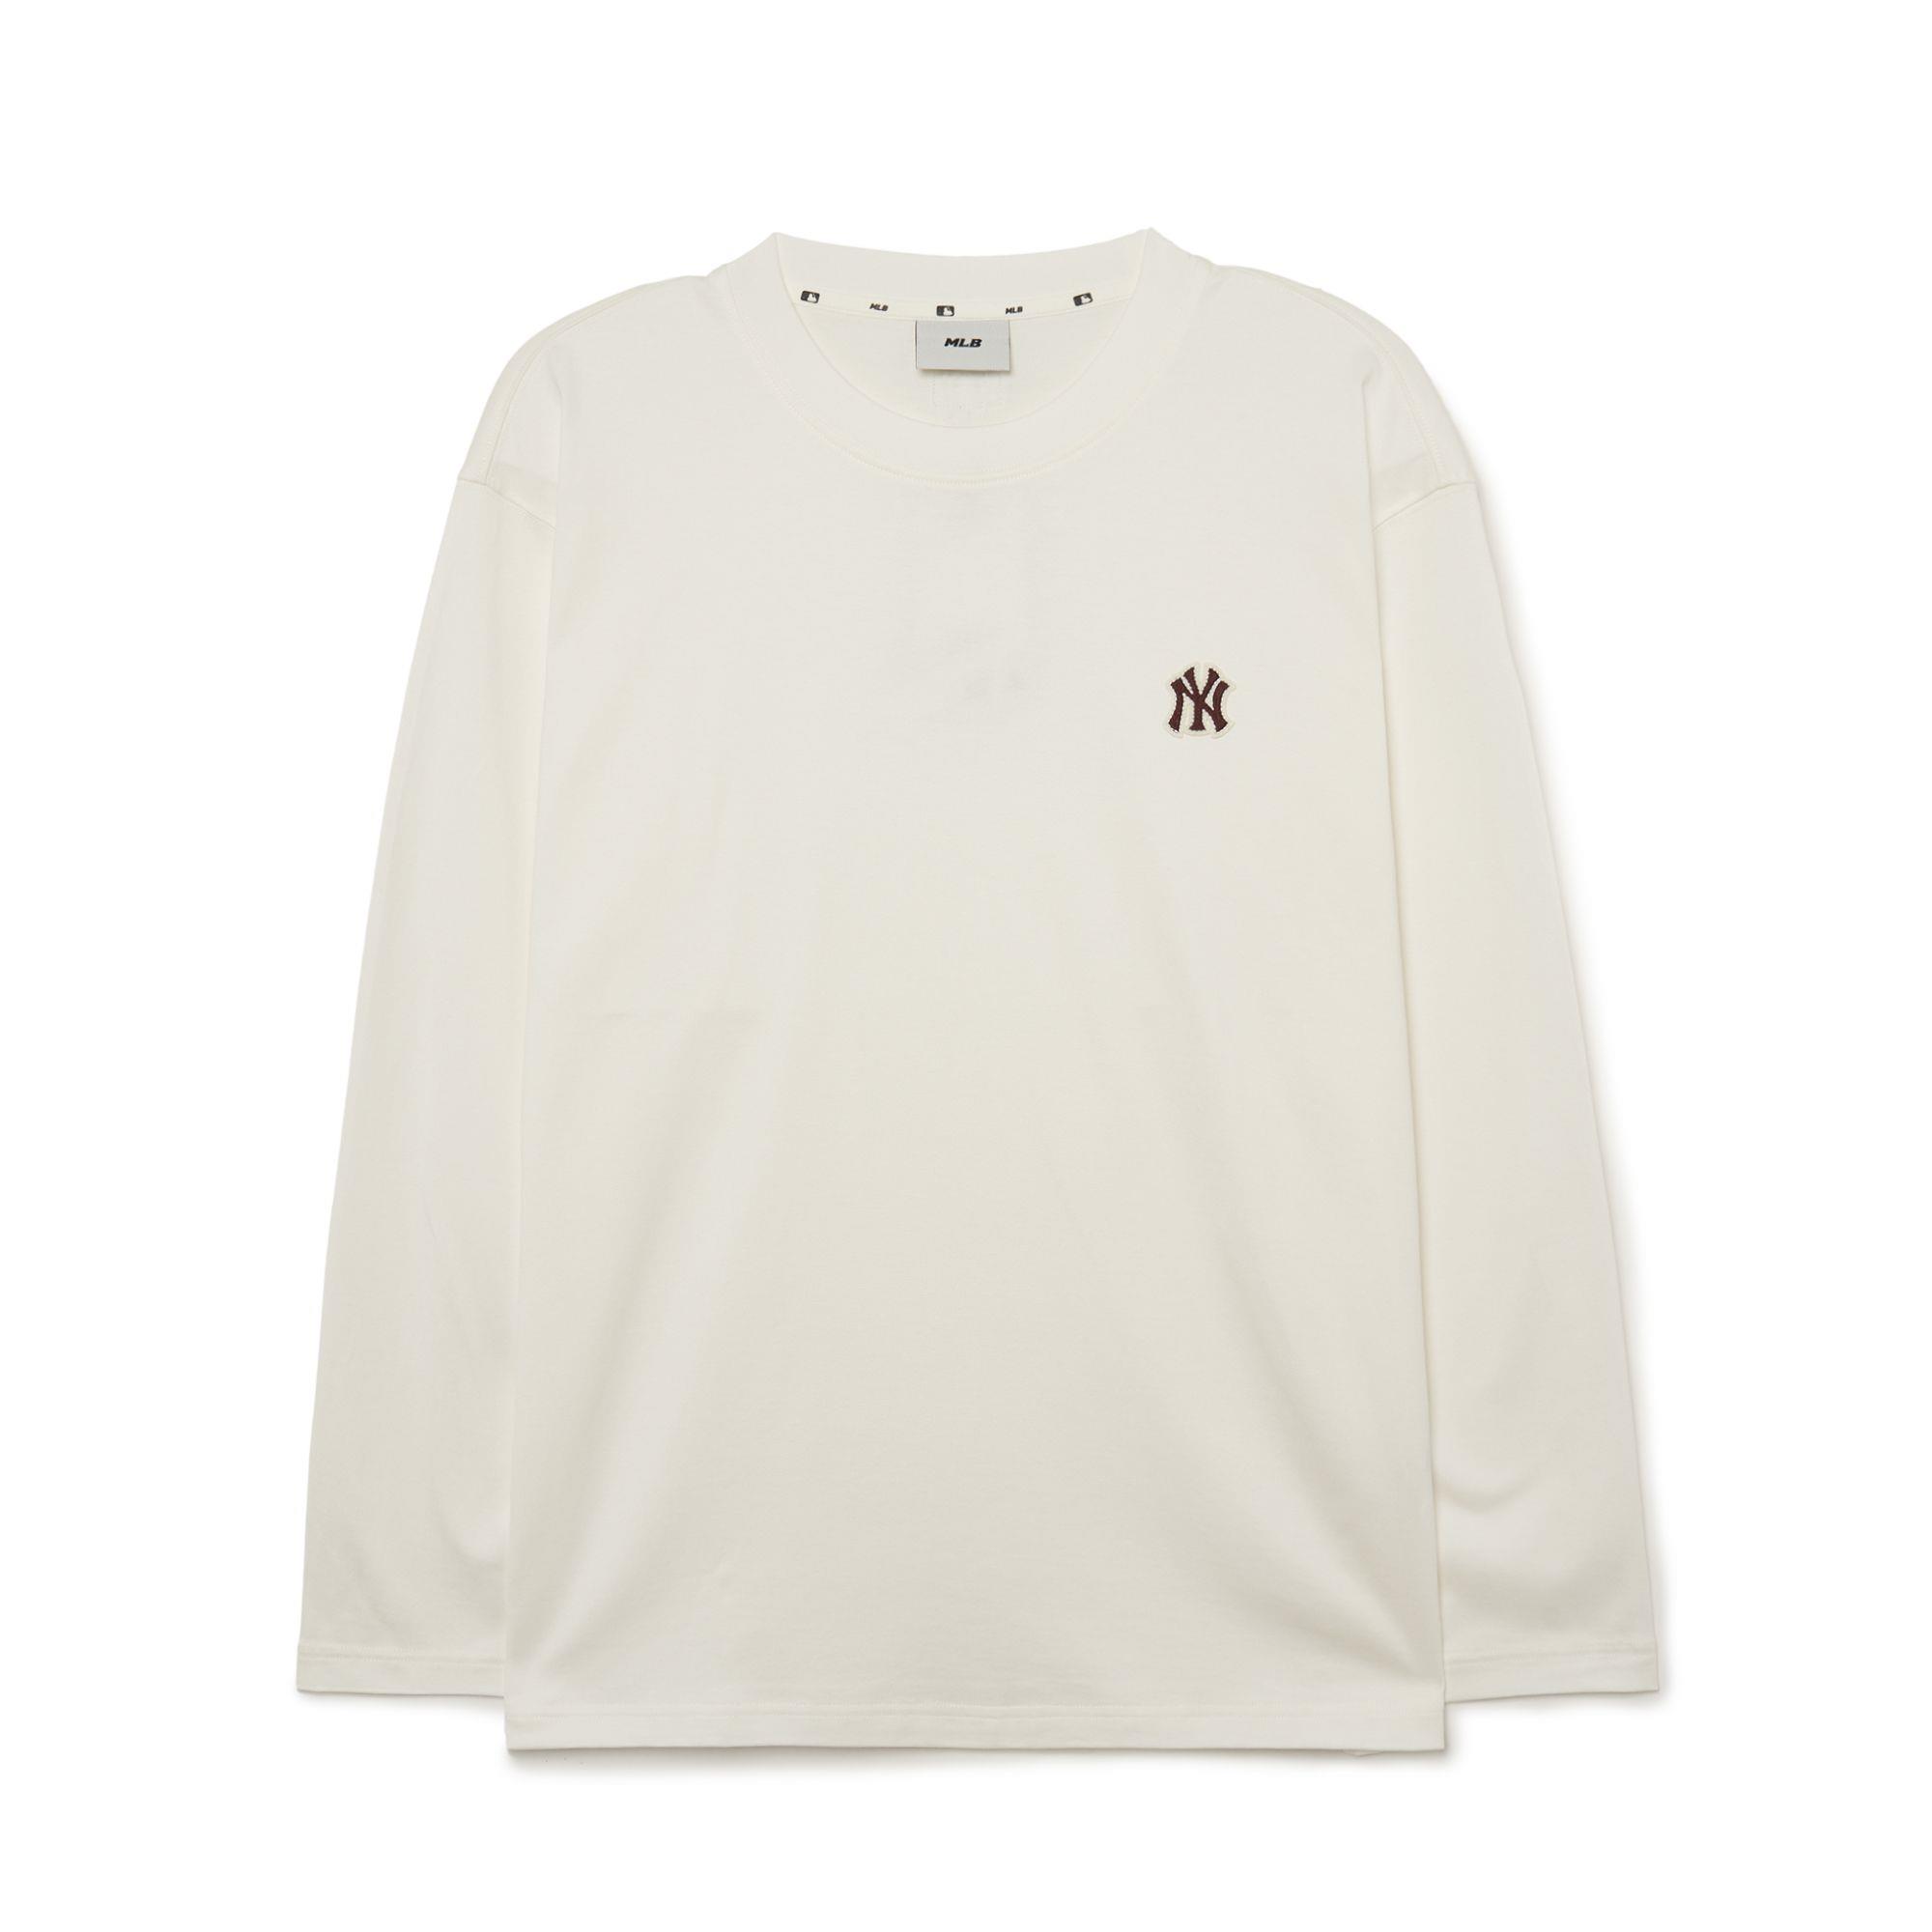 MLB Korea Unisex Street Style Long Sleeves Plain Cotton (3ATSH0133